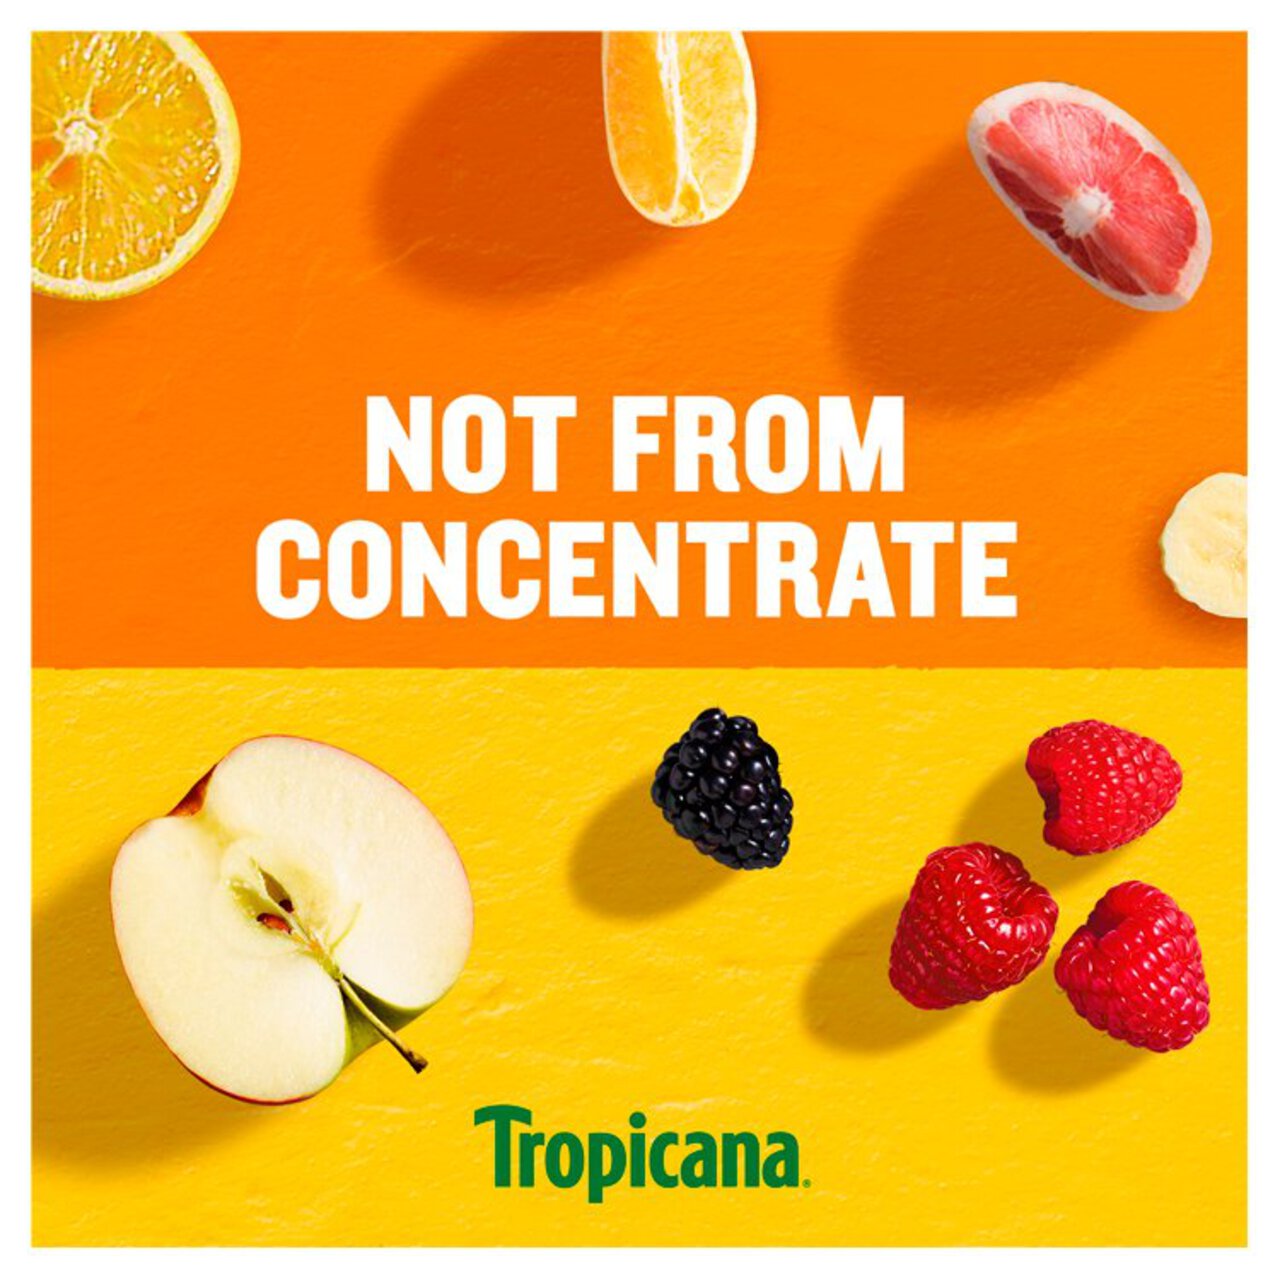 Tropicana Sensations Pineapple Juice 850ml